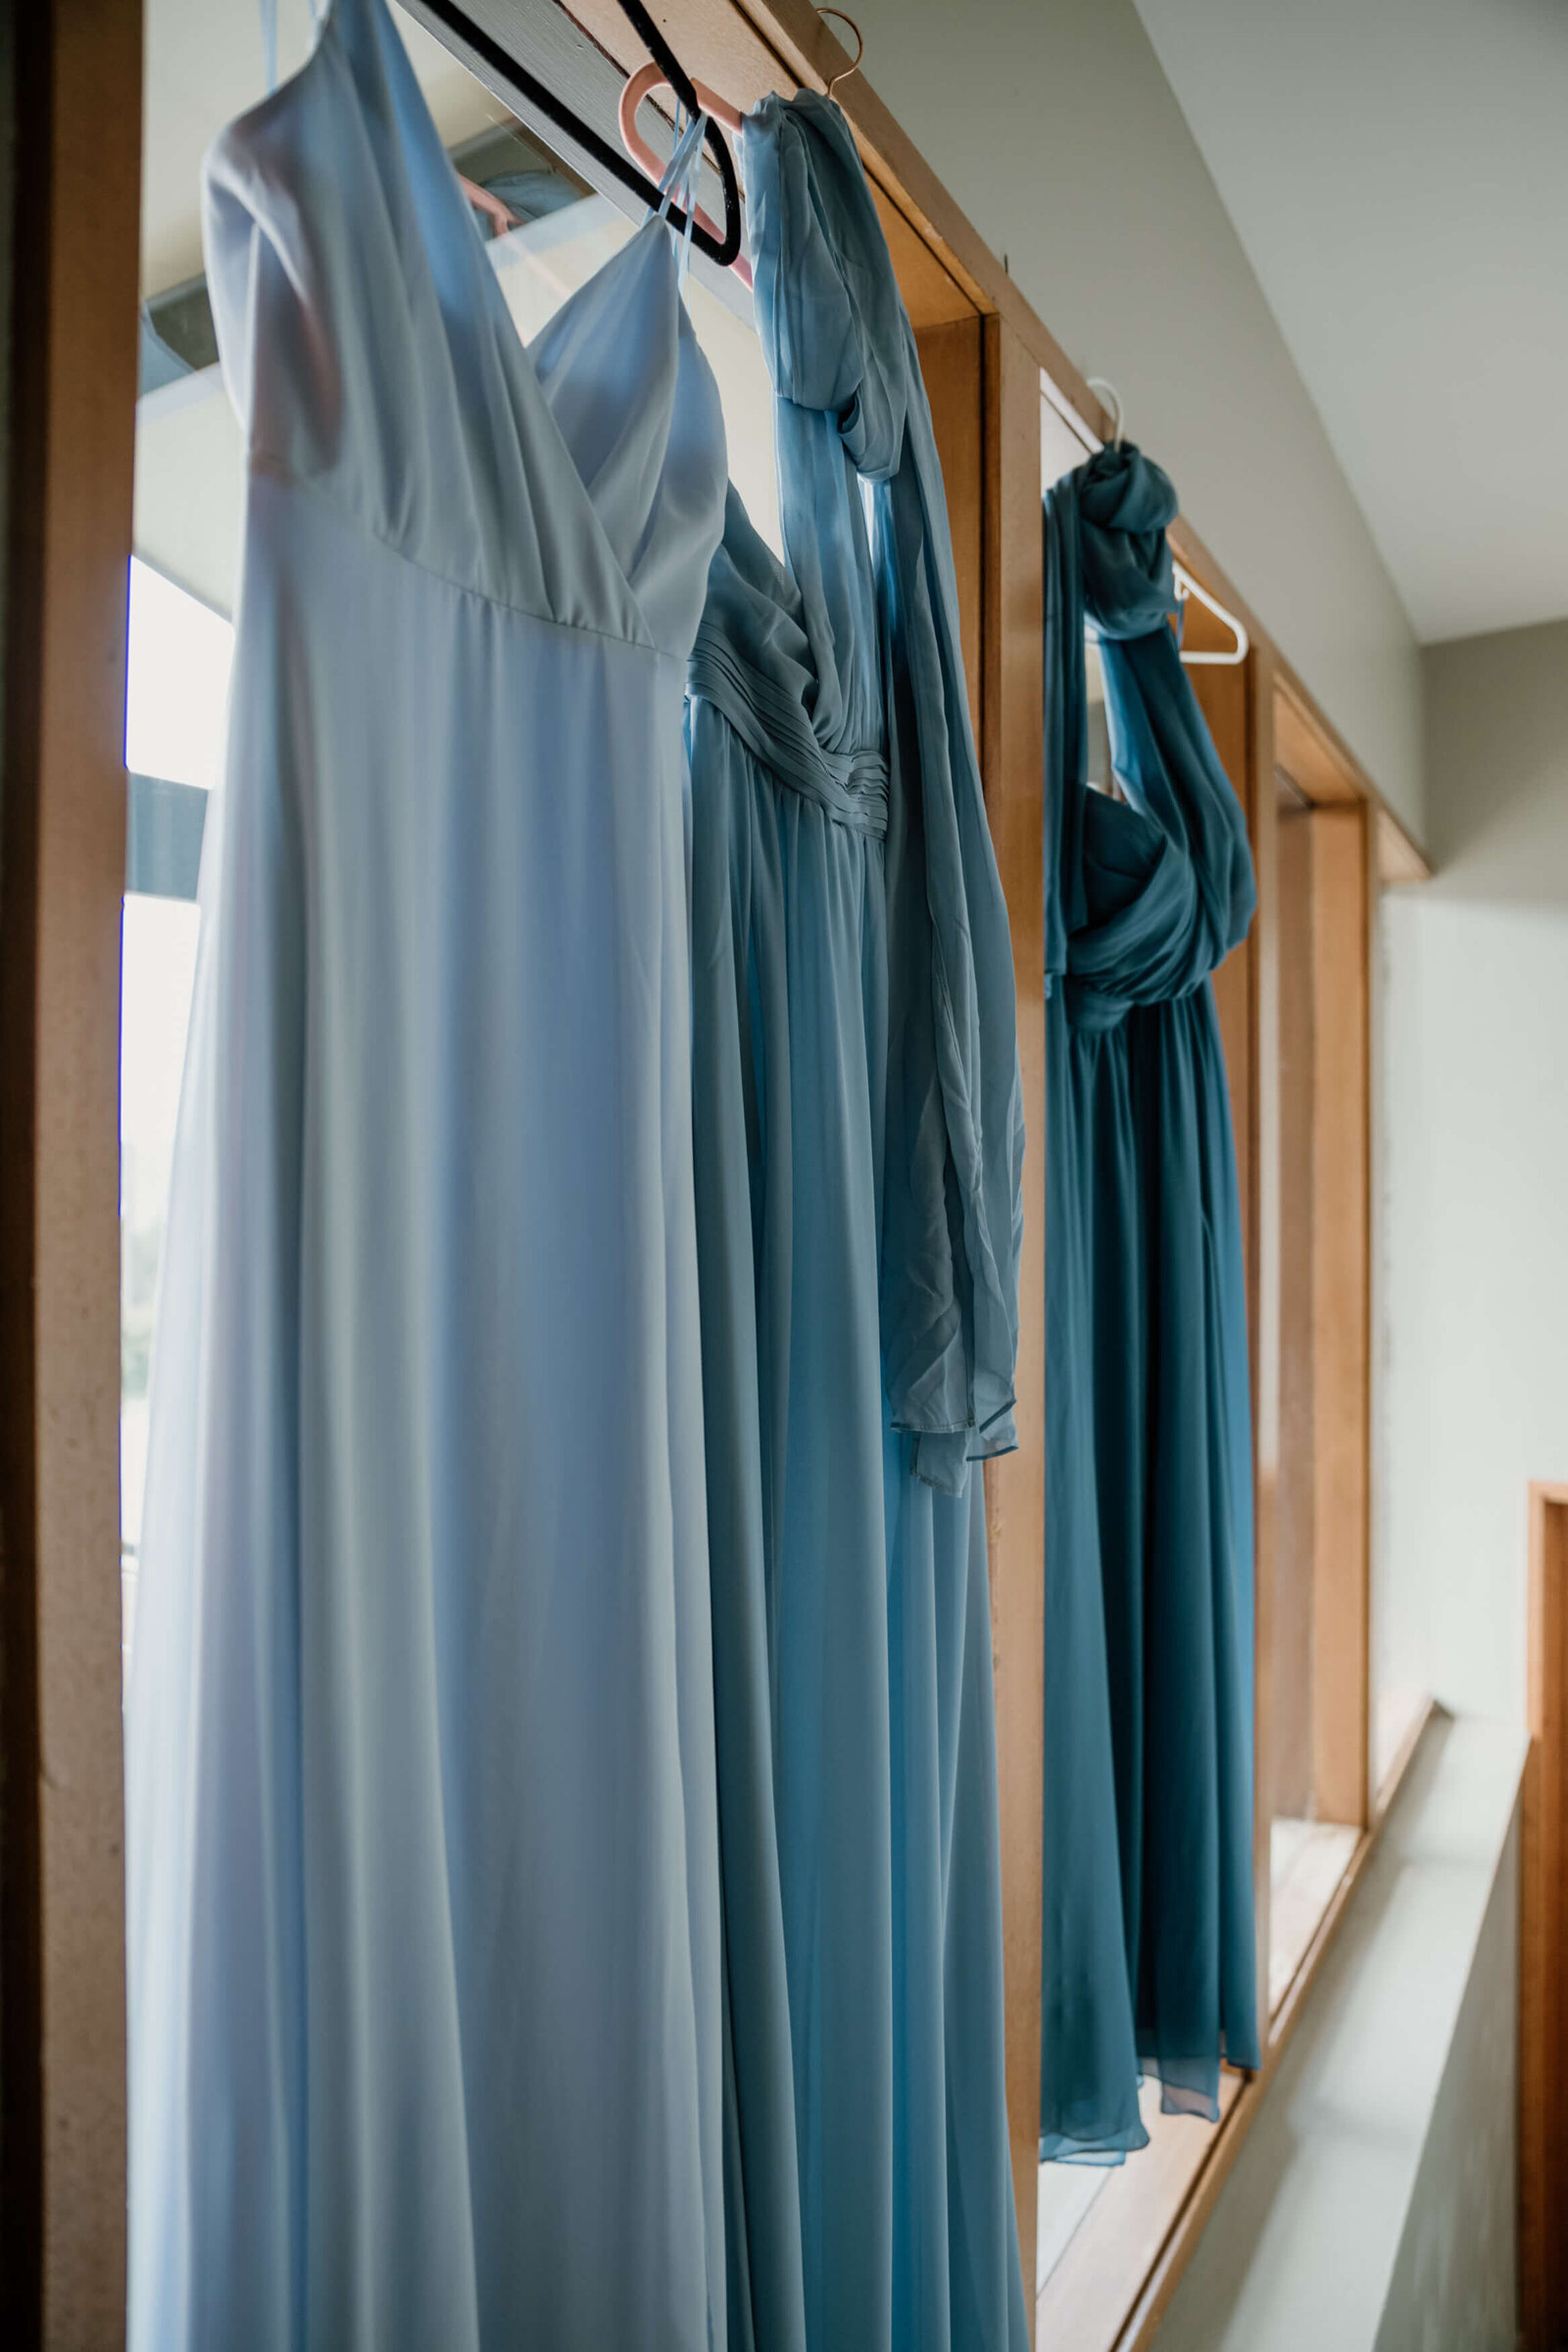 Blue Bridesmaids dresses hung up.